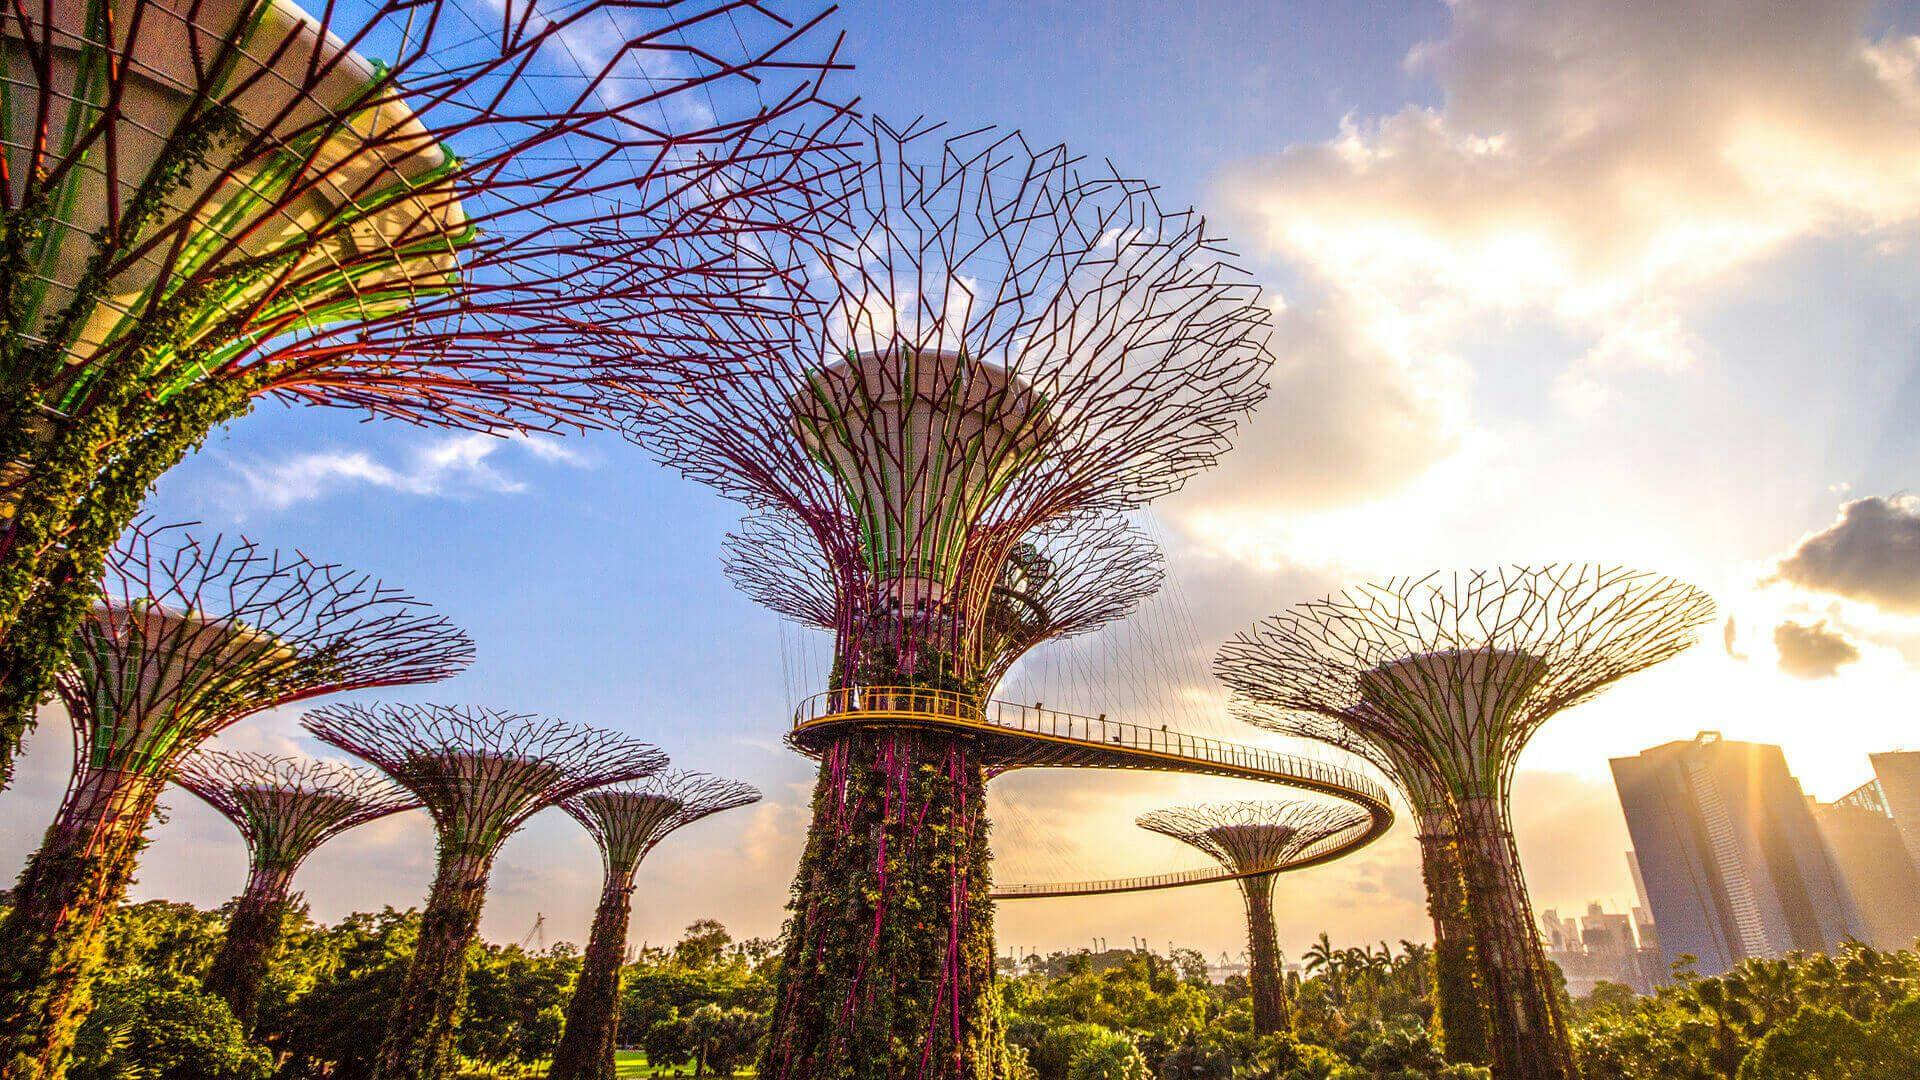 Supertree Grove in Singapore, Indonesia